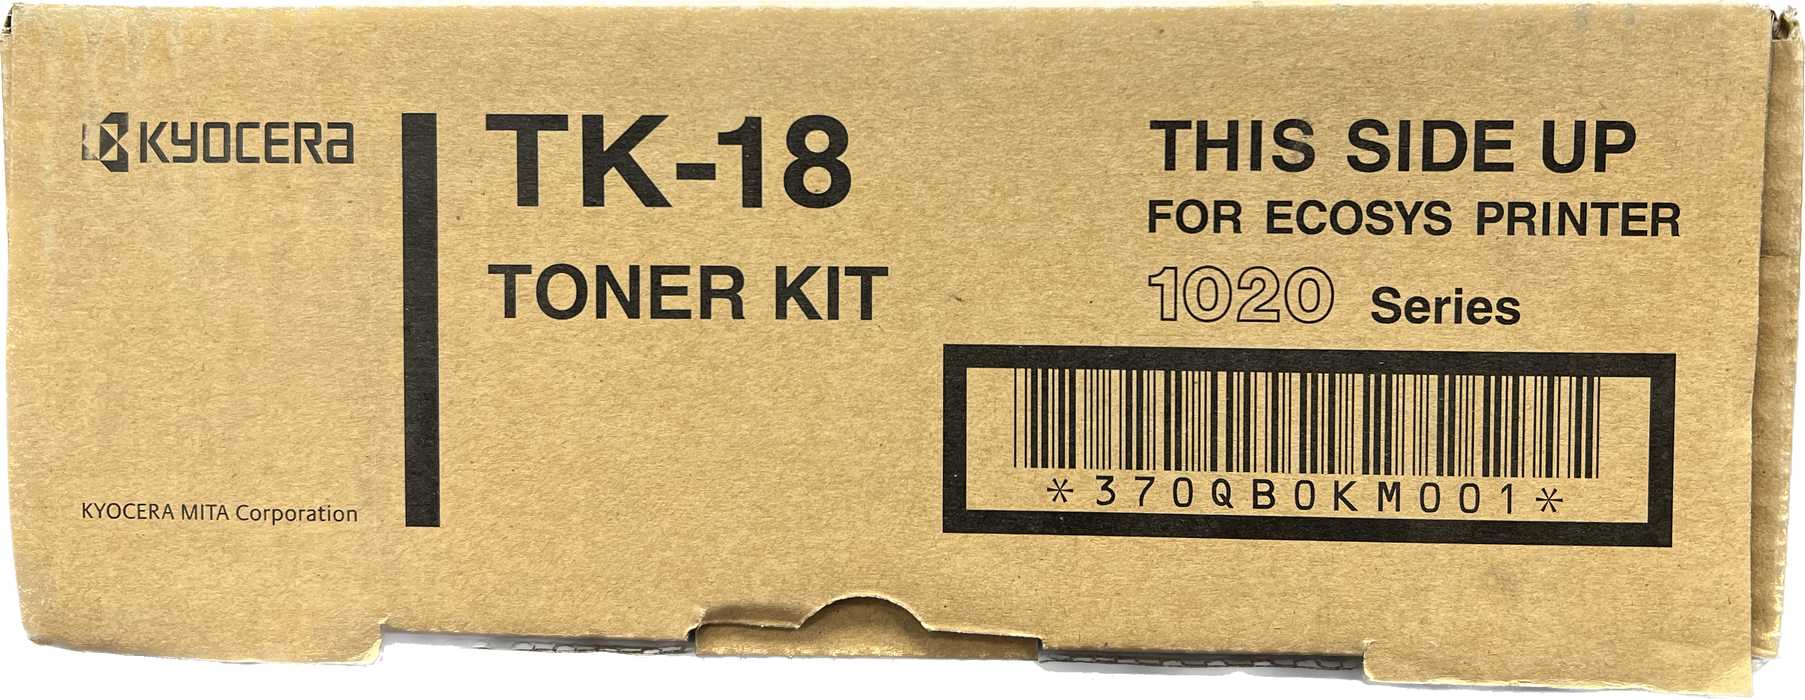 Genuine Kyocera Black Toner Cartridge | 370QB0KM | TK-18